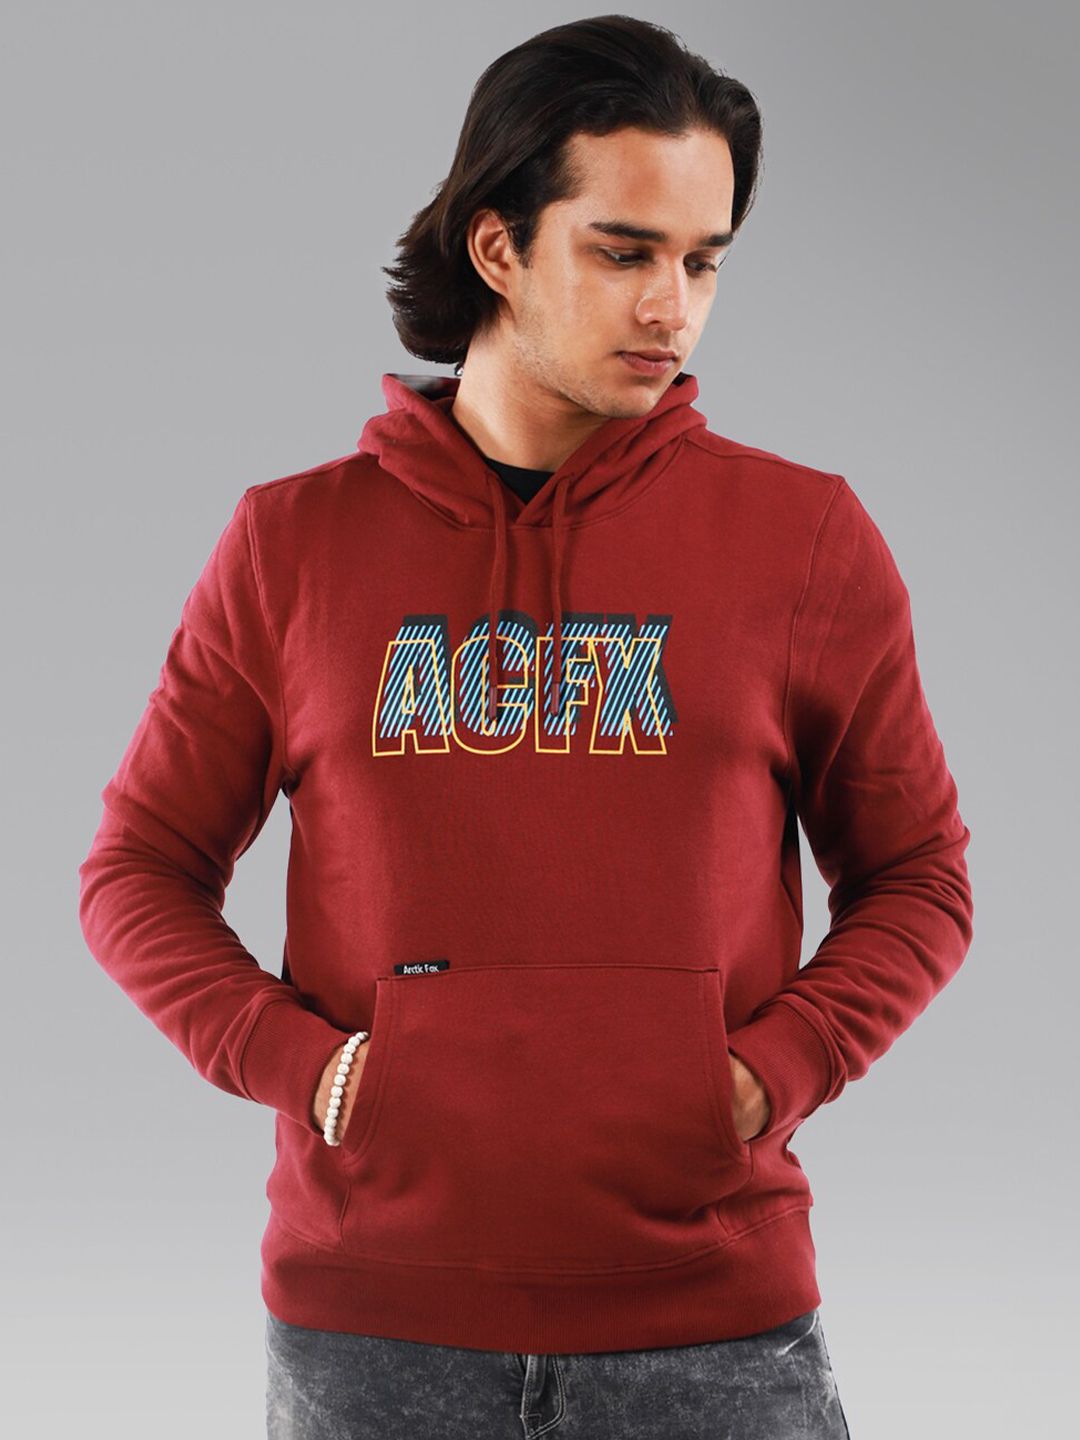 Arctic Fox Unisex Red Printed Hooded Sweatshirt Price in India